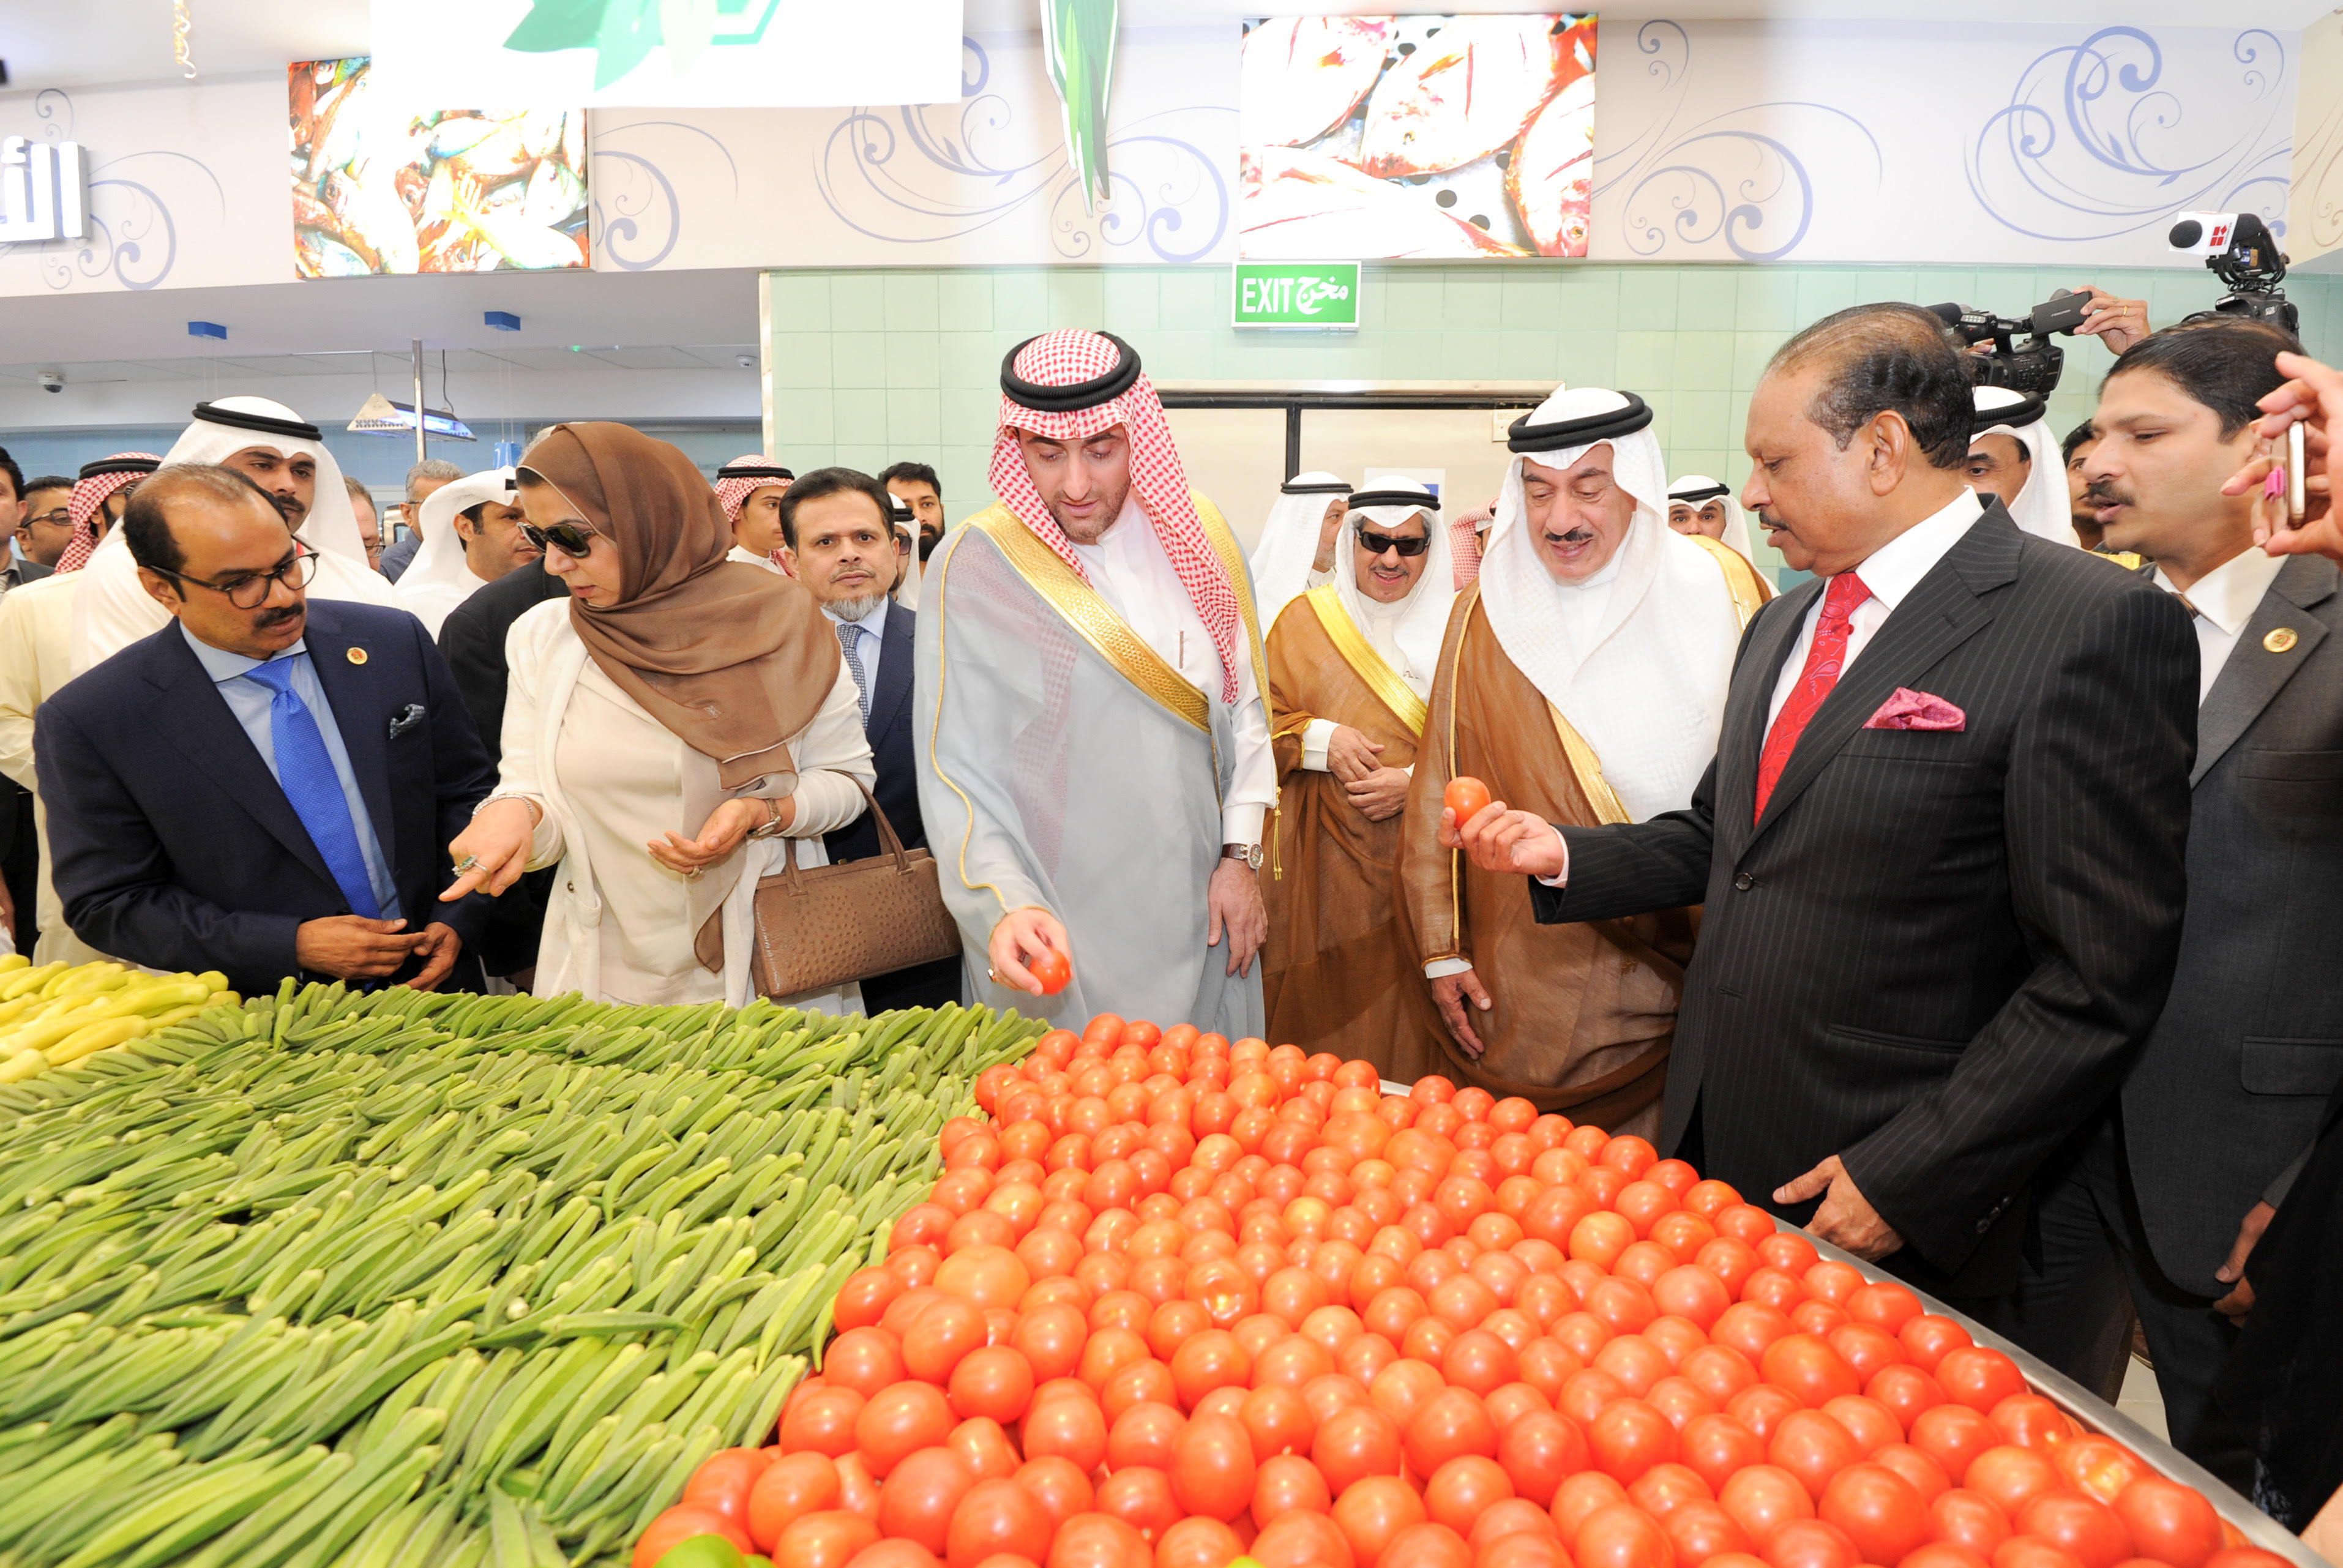 LULU EXPANDS KUWAIT OPERATIONS OPENS 7th hypermarket in Al Jahra